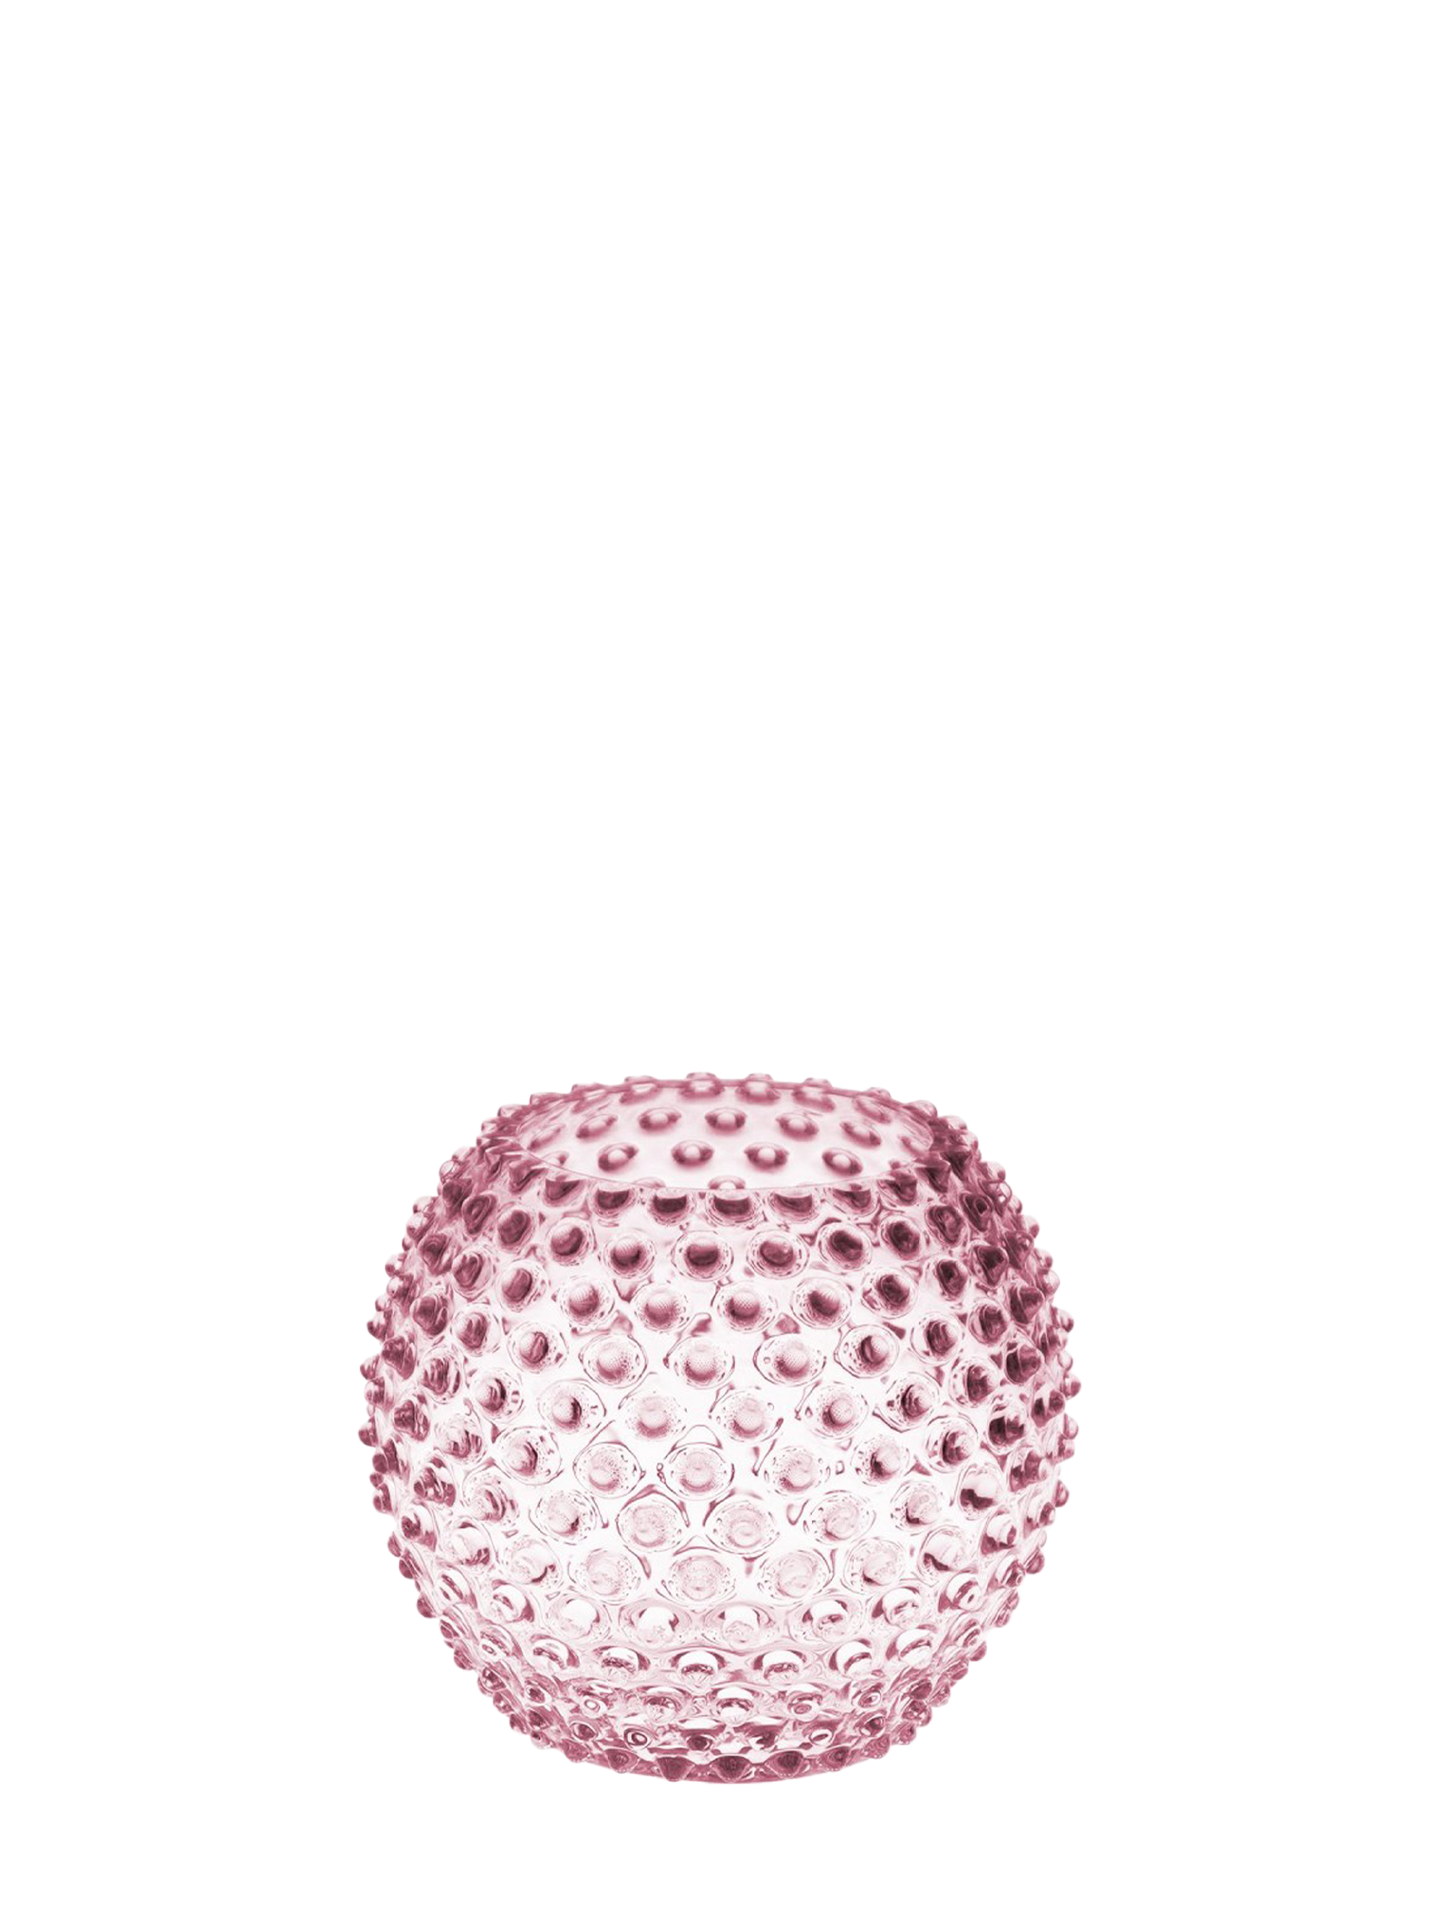 Rosa Hobnail Globe vase, small